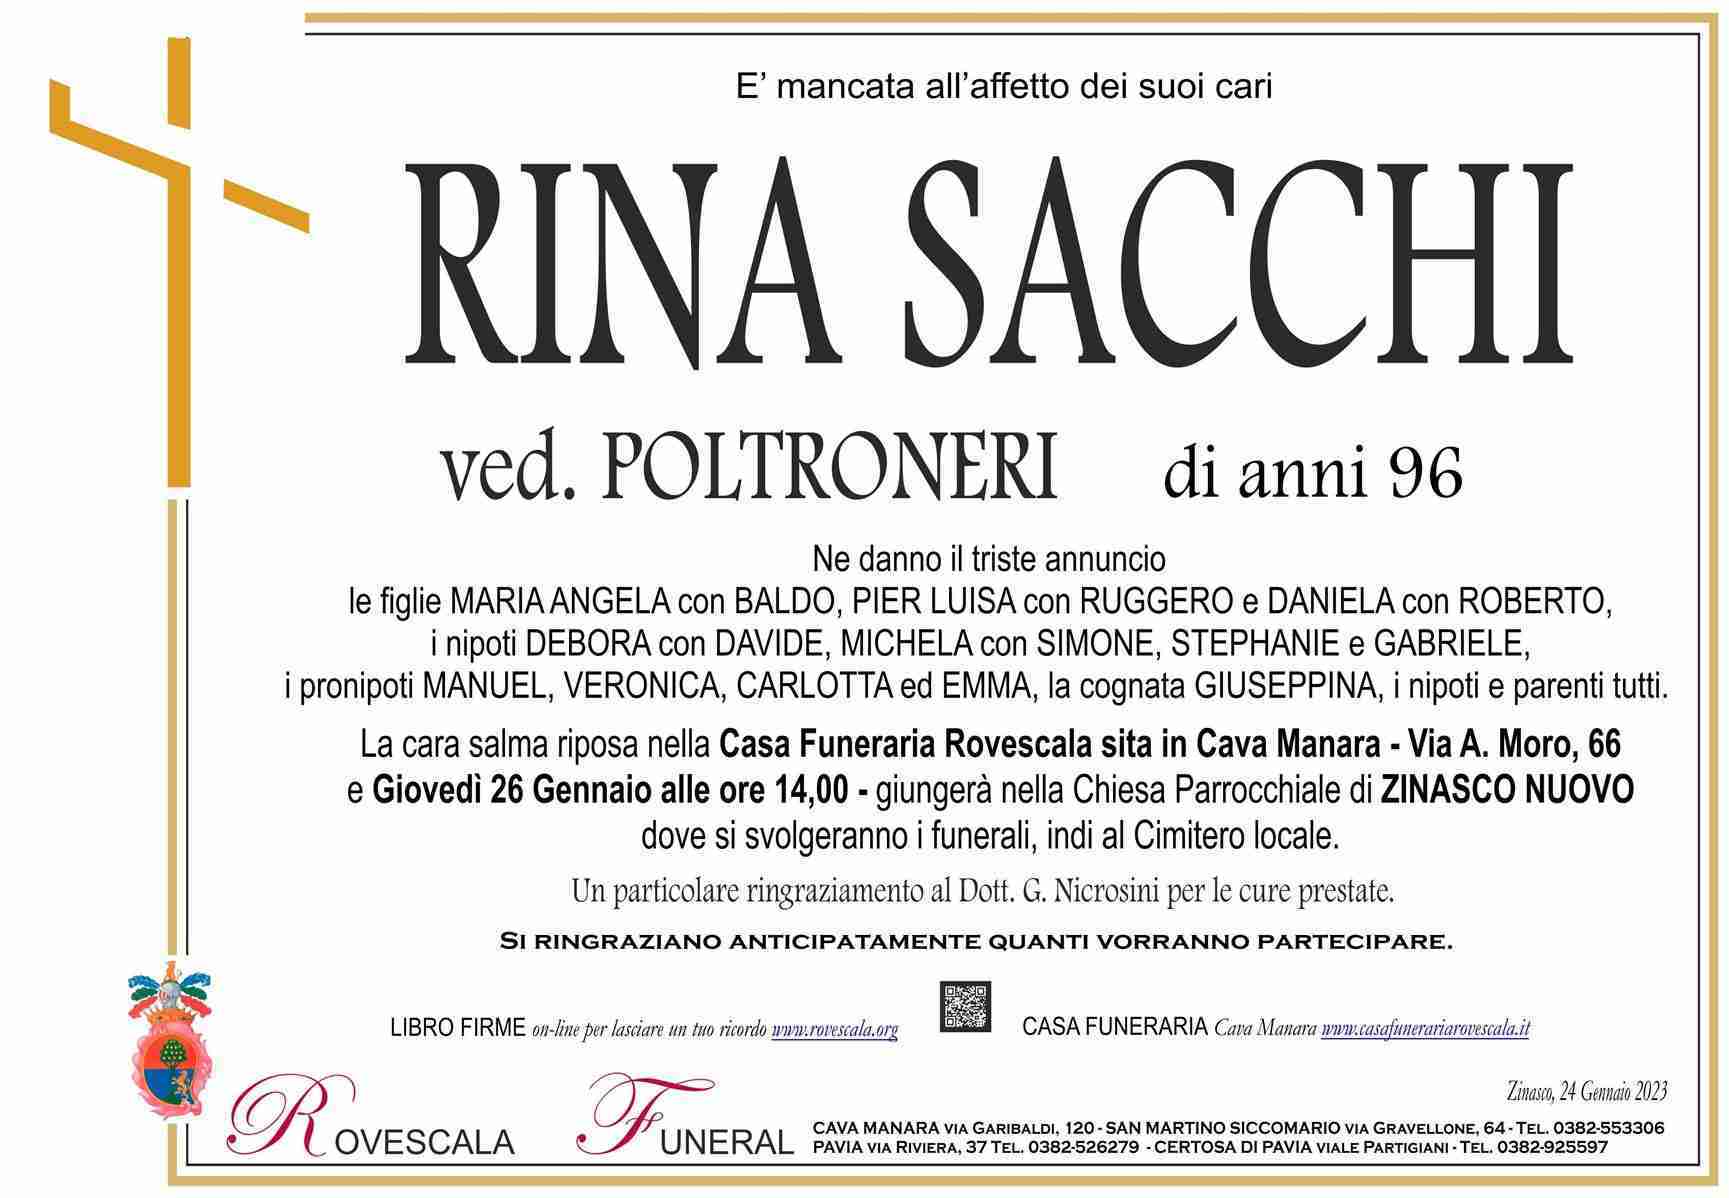 Rina Sacchi